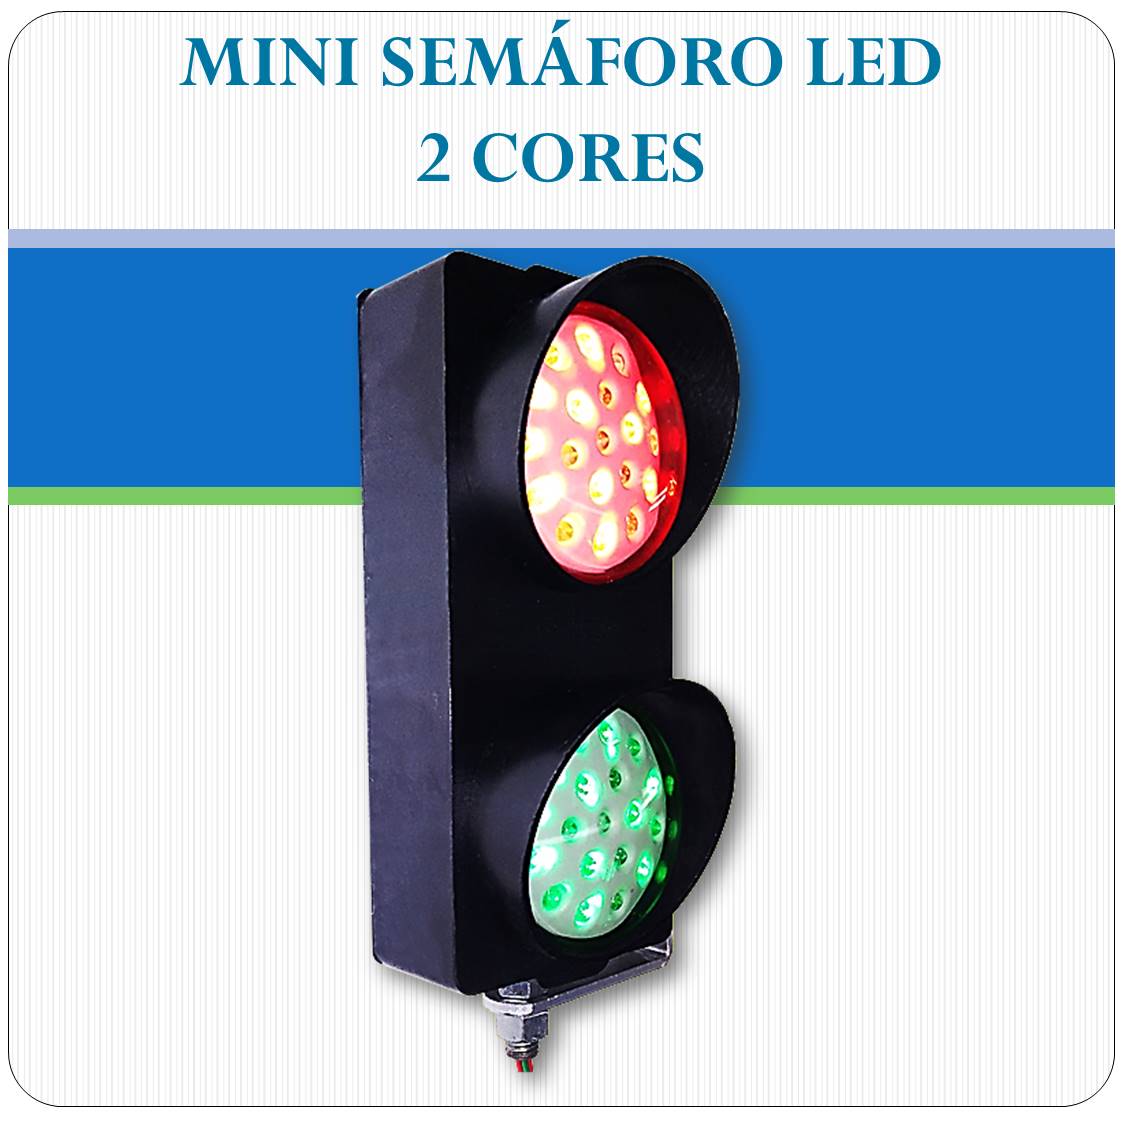 Mini Semaforo Led - 2 Cores